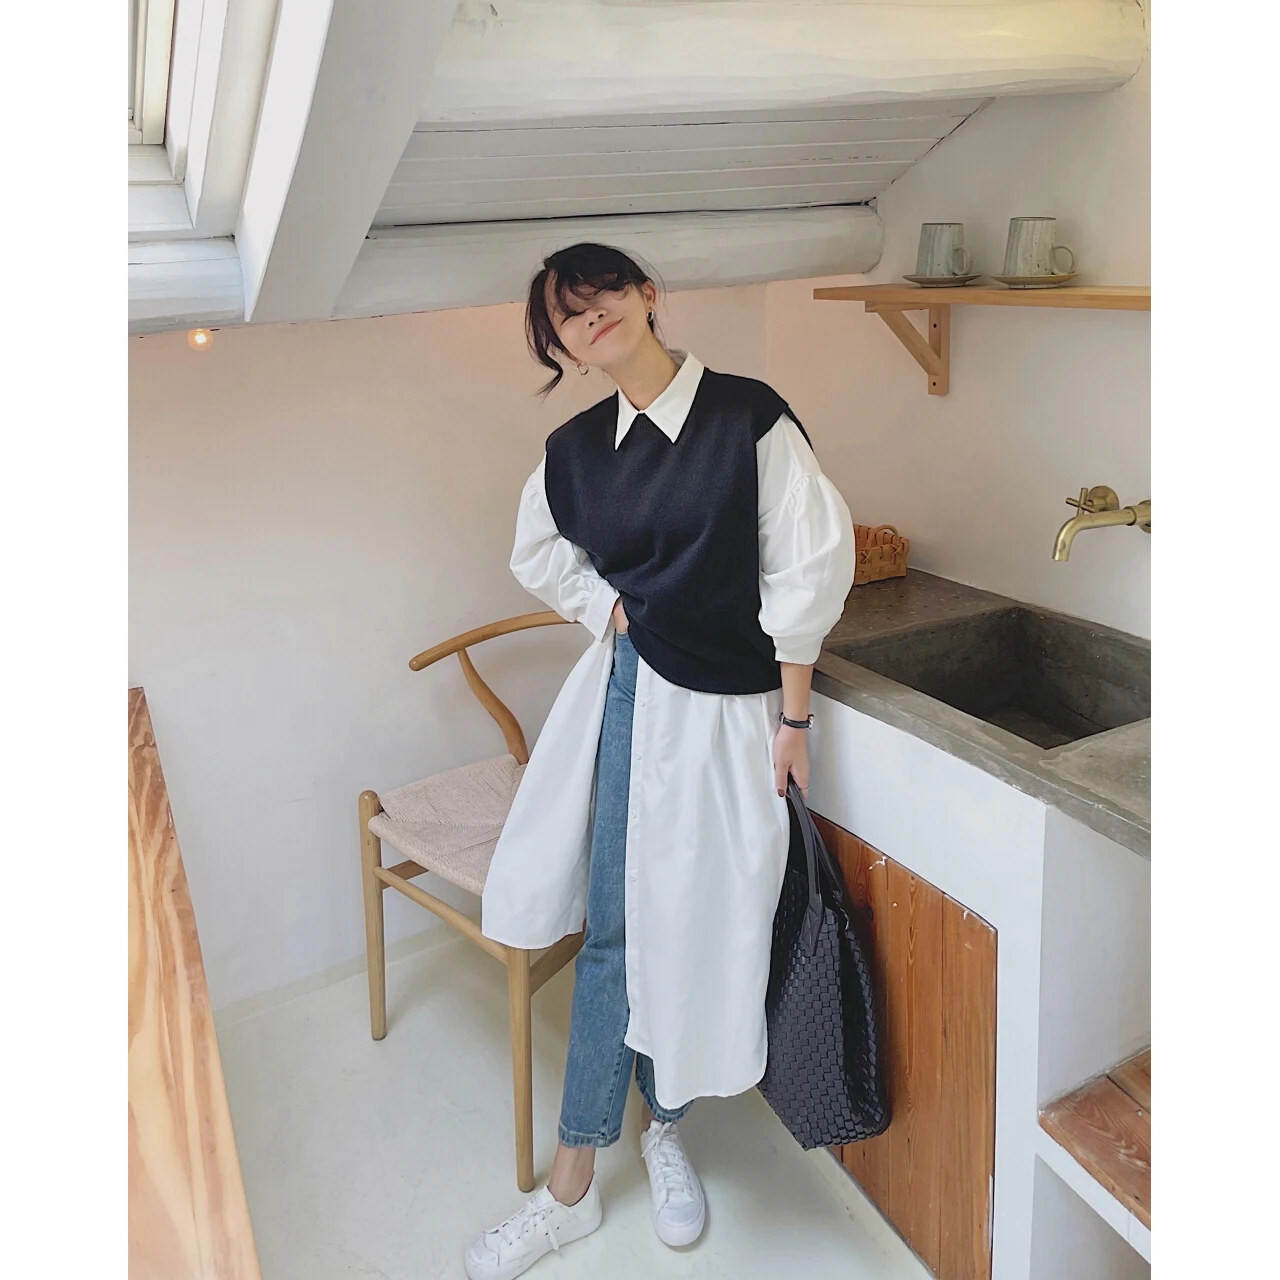 2021 Women's Basic Long Dress  Shirt Autumn Winter Oversize Blouses Woman Korean Fashion Clothing Cardigan Jacket Coat Tunics зажим для самоката chilli clamp scs oversize 2021 black c 1046 b